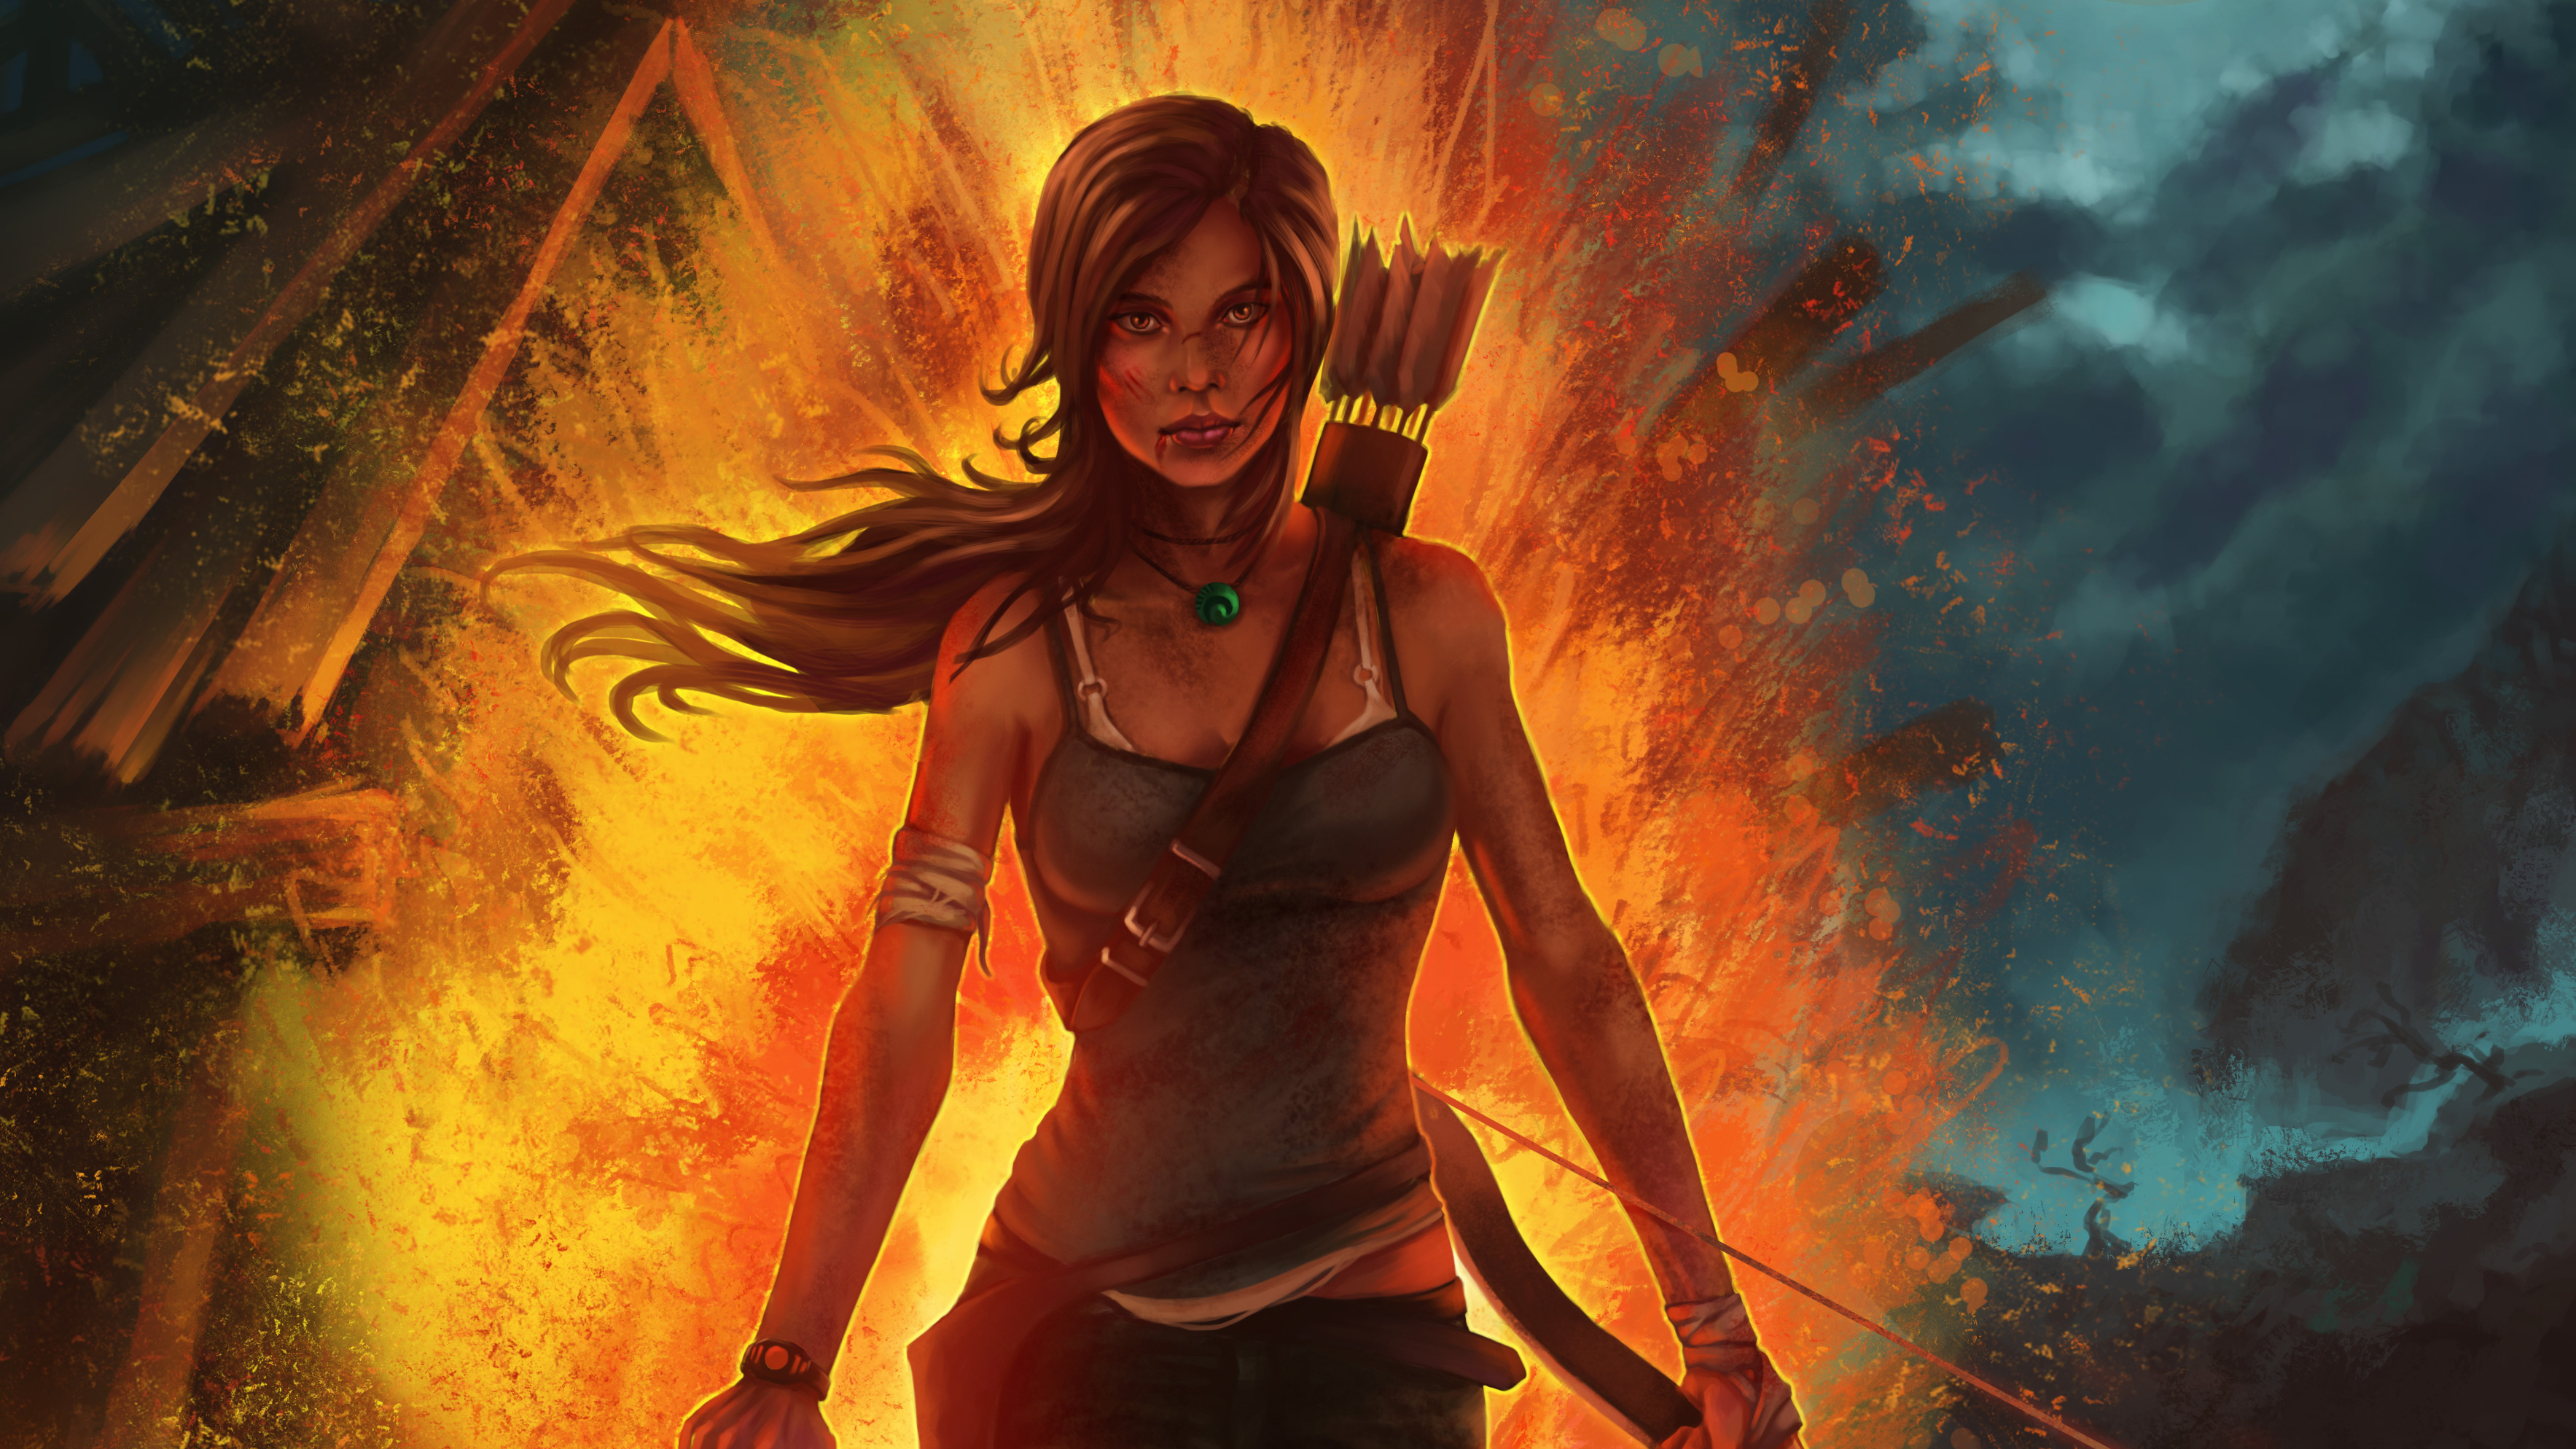 Tomb Raider Artworks, HD Games, 4k Wallpapers, Images ...